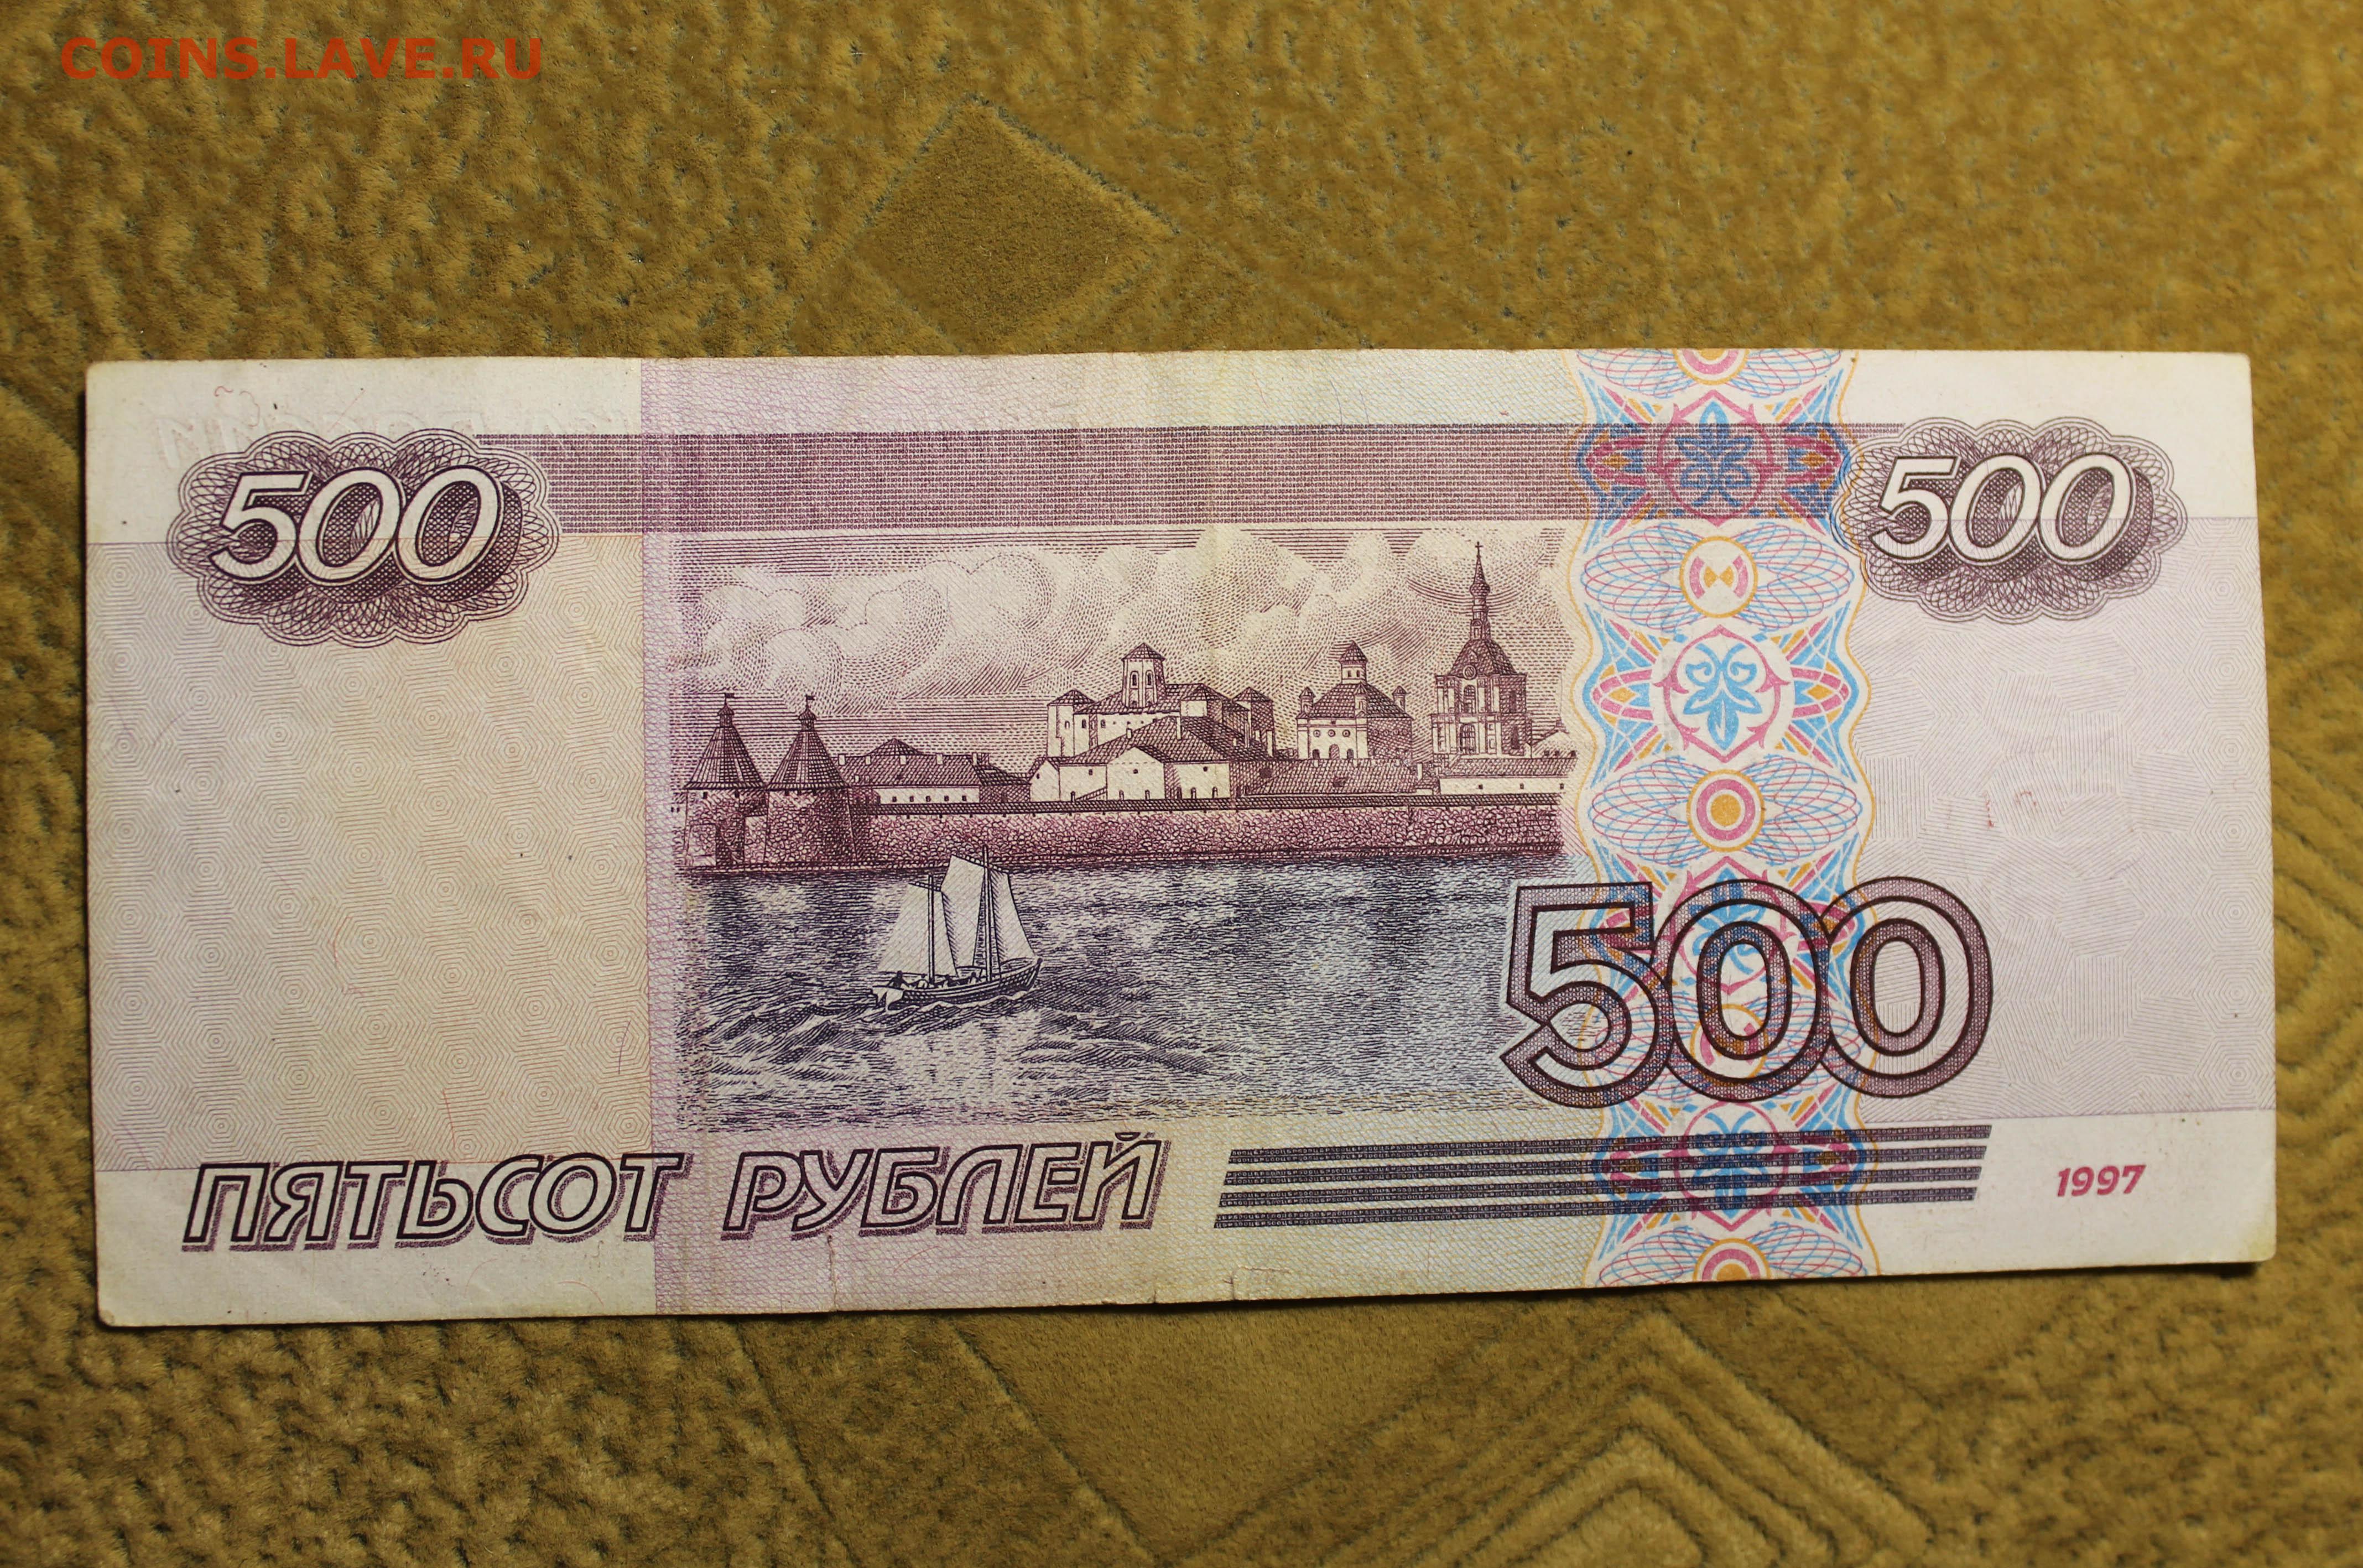 500 рублей хватит. 500 Рублей. Купюра 500р. Купюра 500 рублей. Пятьсот рублей.